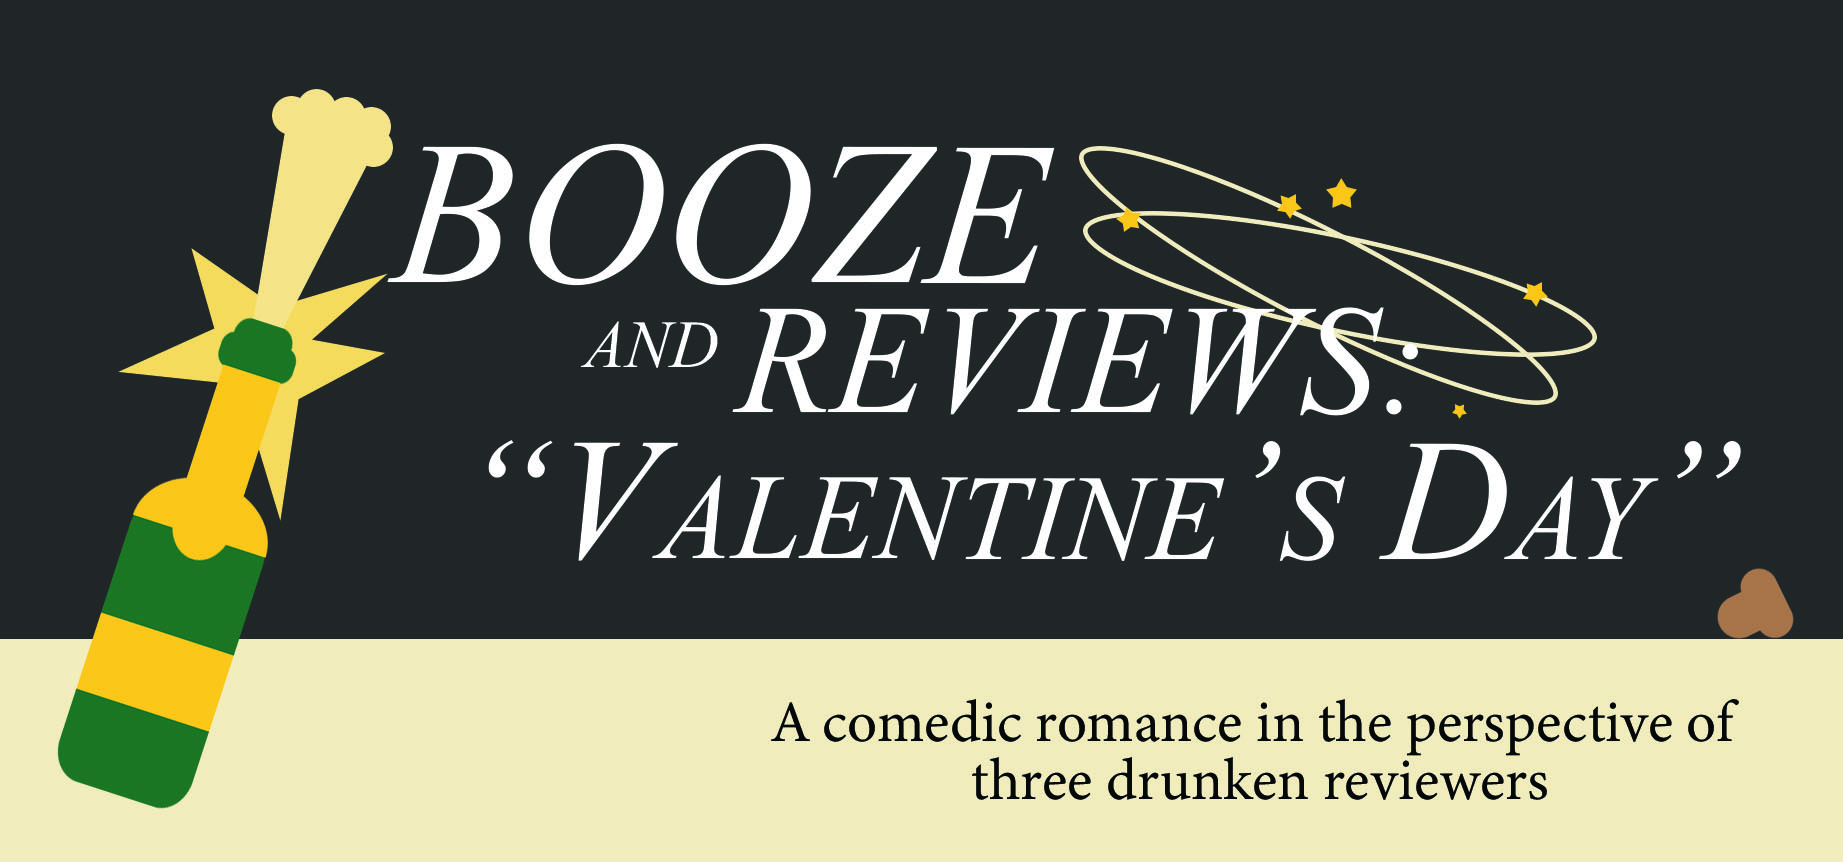 Booze & reviews: “Valentine’s Day”